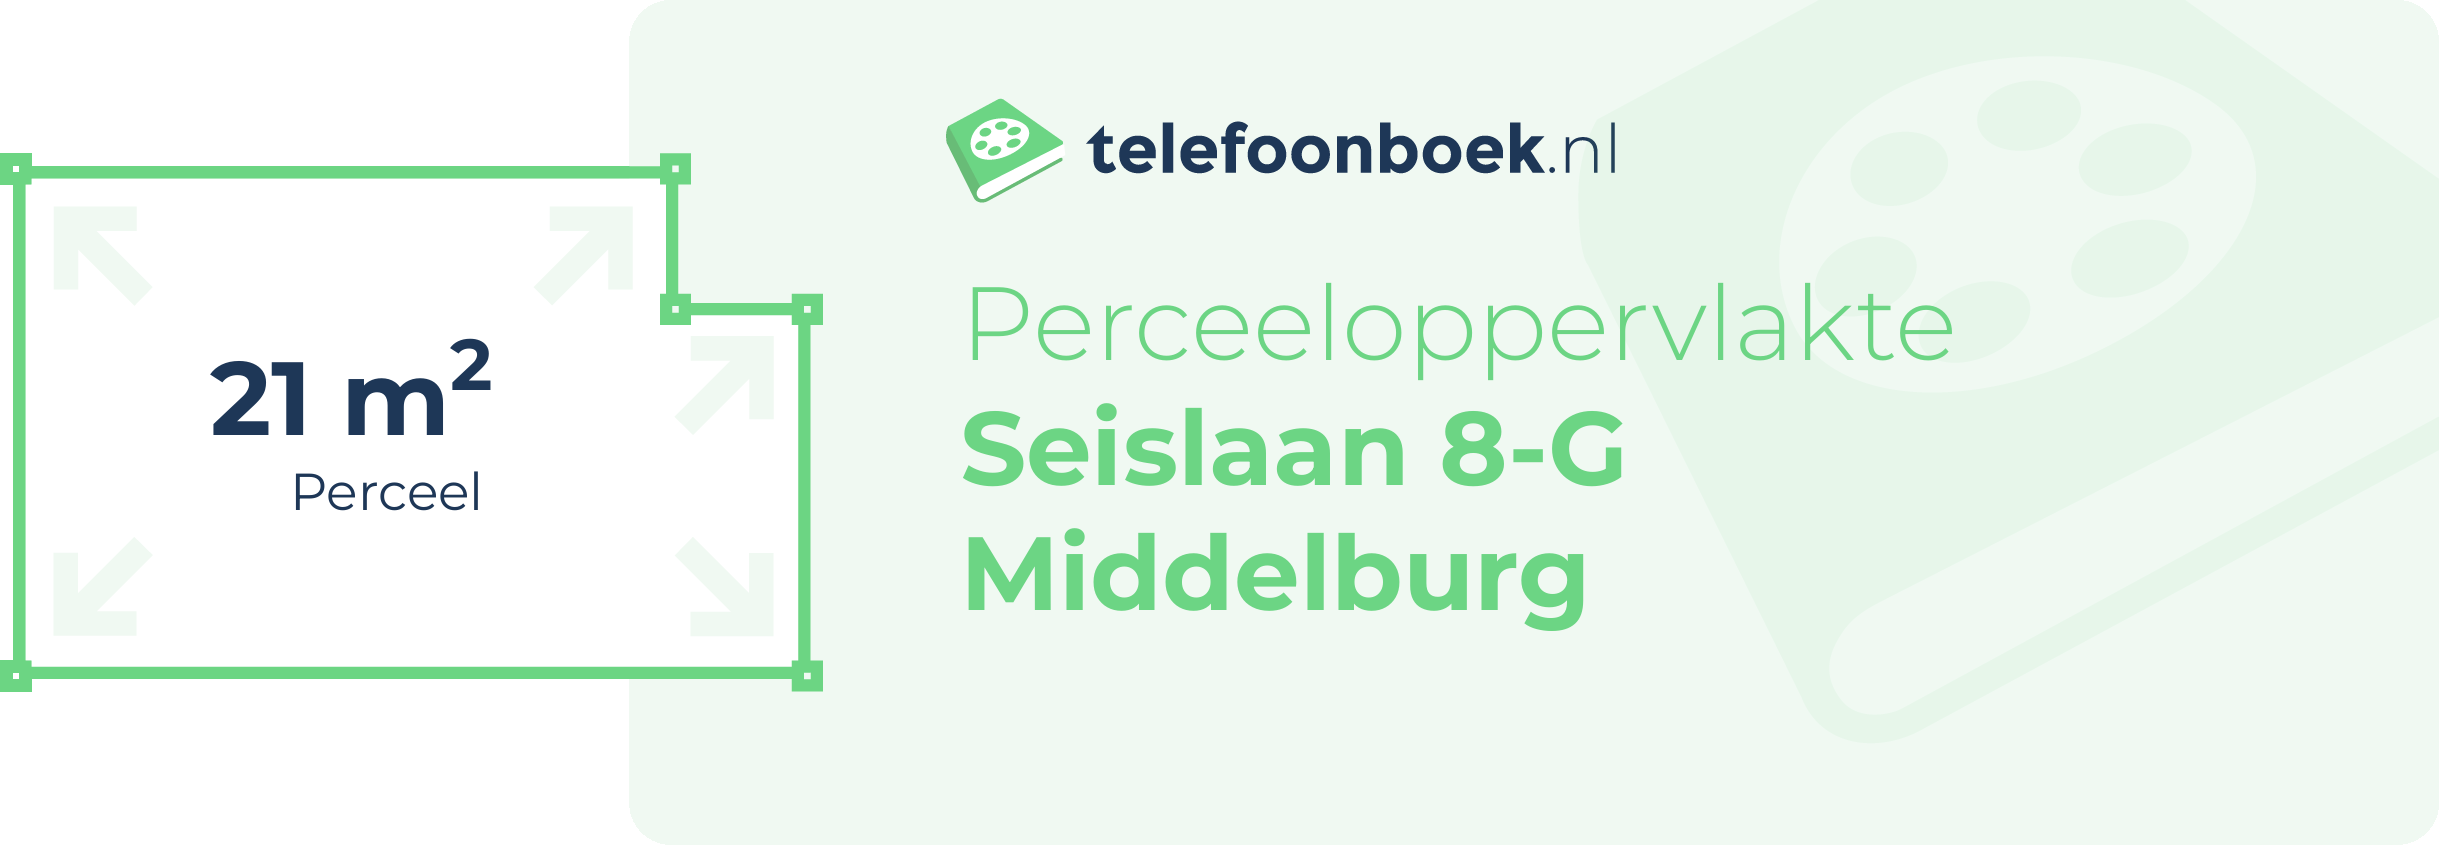 Perceeloppervlakte Seislaan 8-G Middelburg